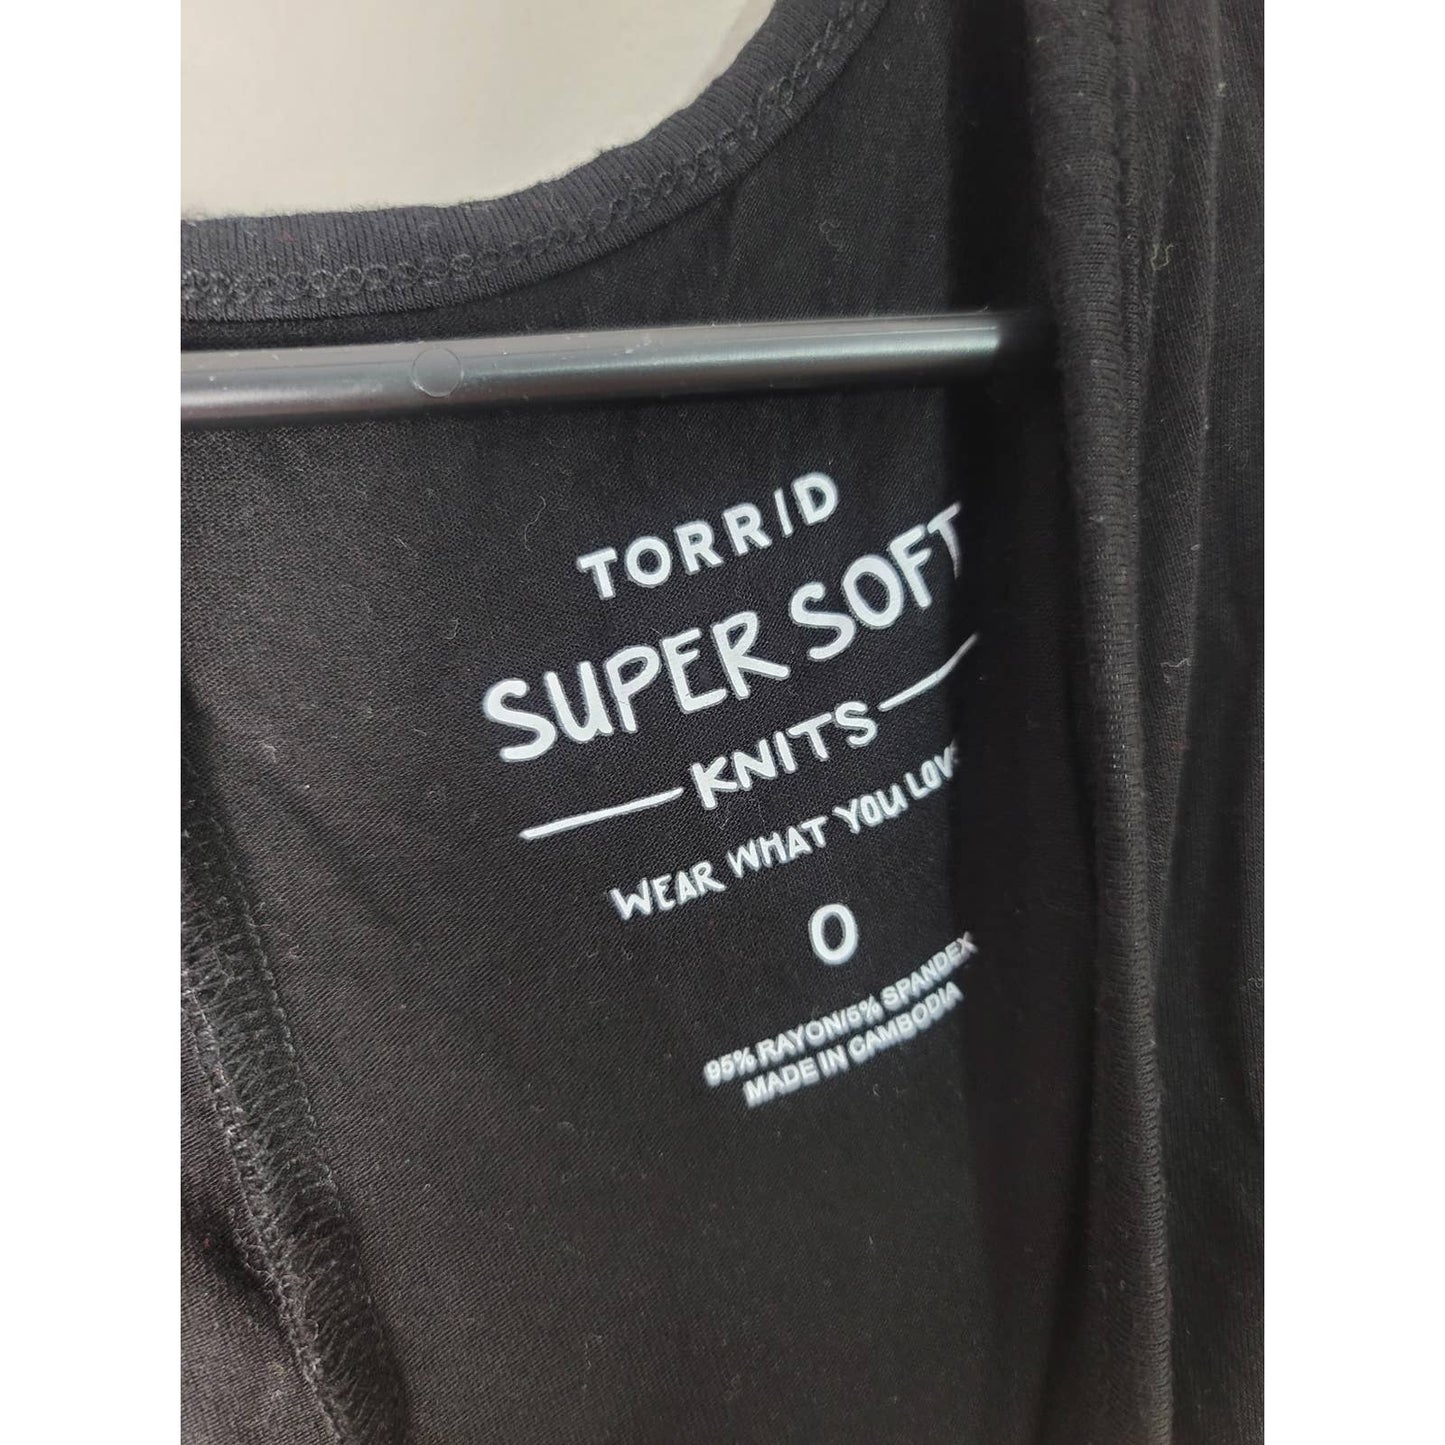 Torrid Super Soft Knit Black V-Neck Tank Plus Size 0/0X